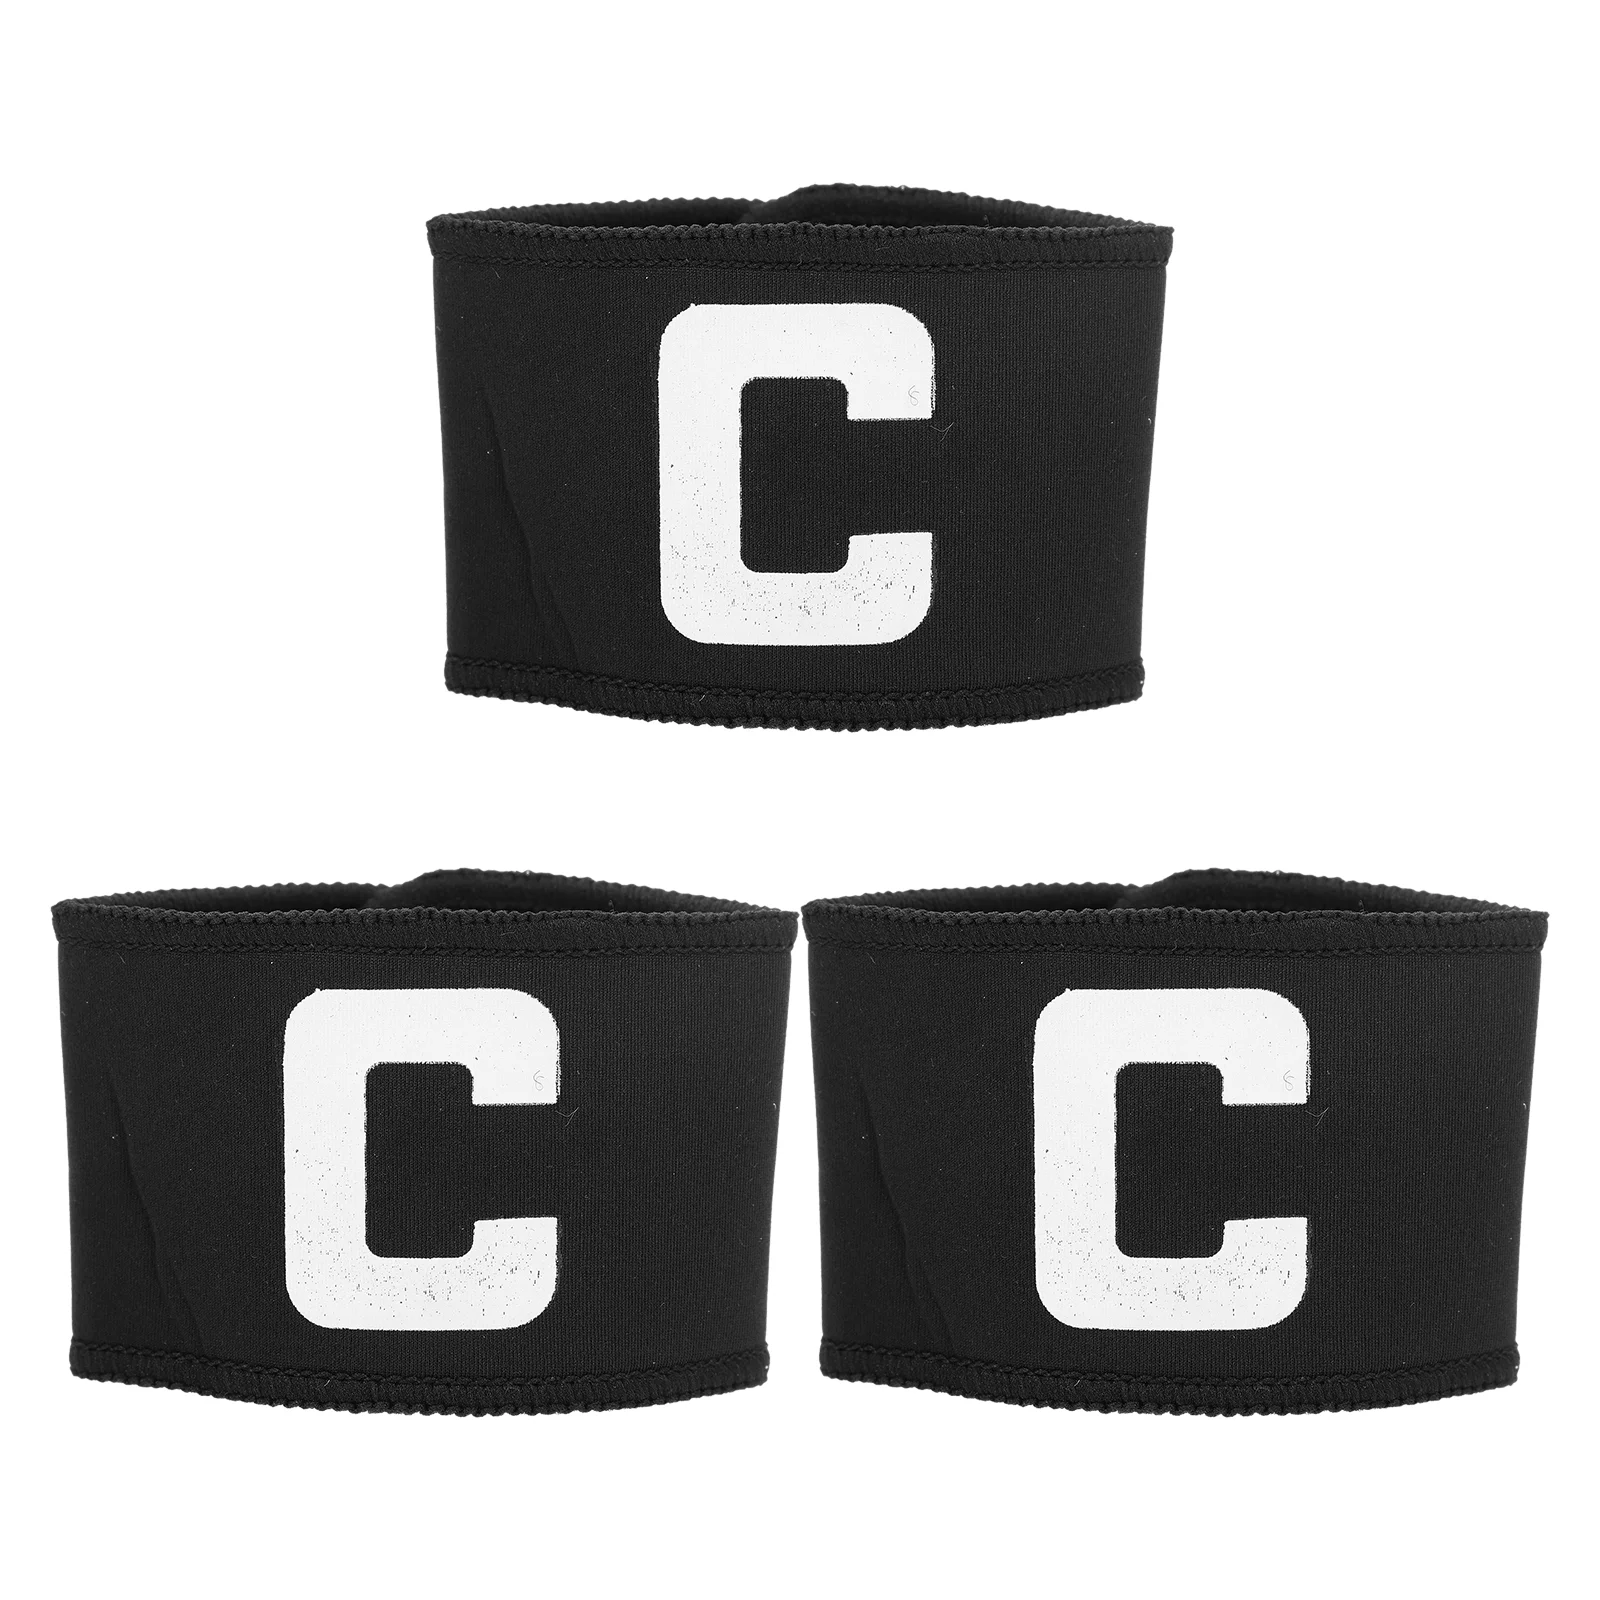 

Armband Soccer Captain Leader Football Arm Armbands Band Youth Adjustable Elastic Standard Team Bands Sleeve Supplies C Mark